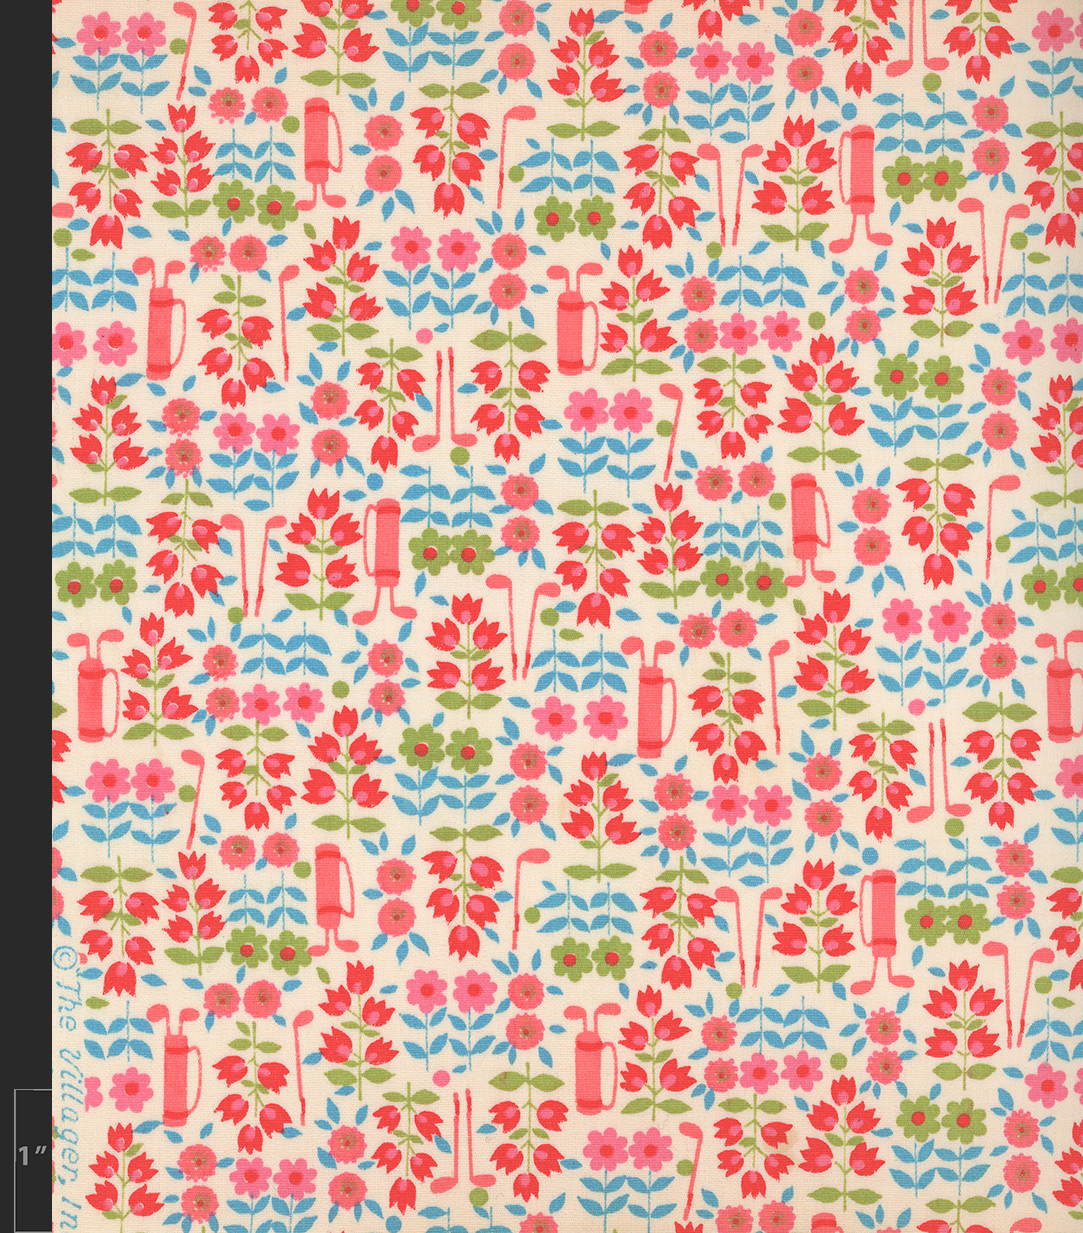 Marielle Bancou Segal conversational printed textile design for The Villager 1960s full 1 Drexel Digital Museum